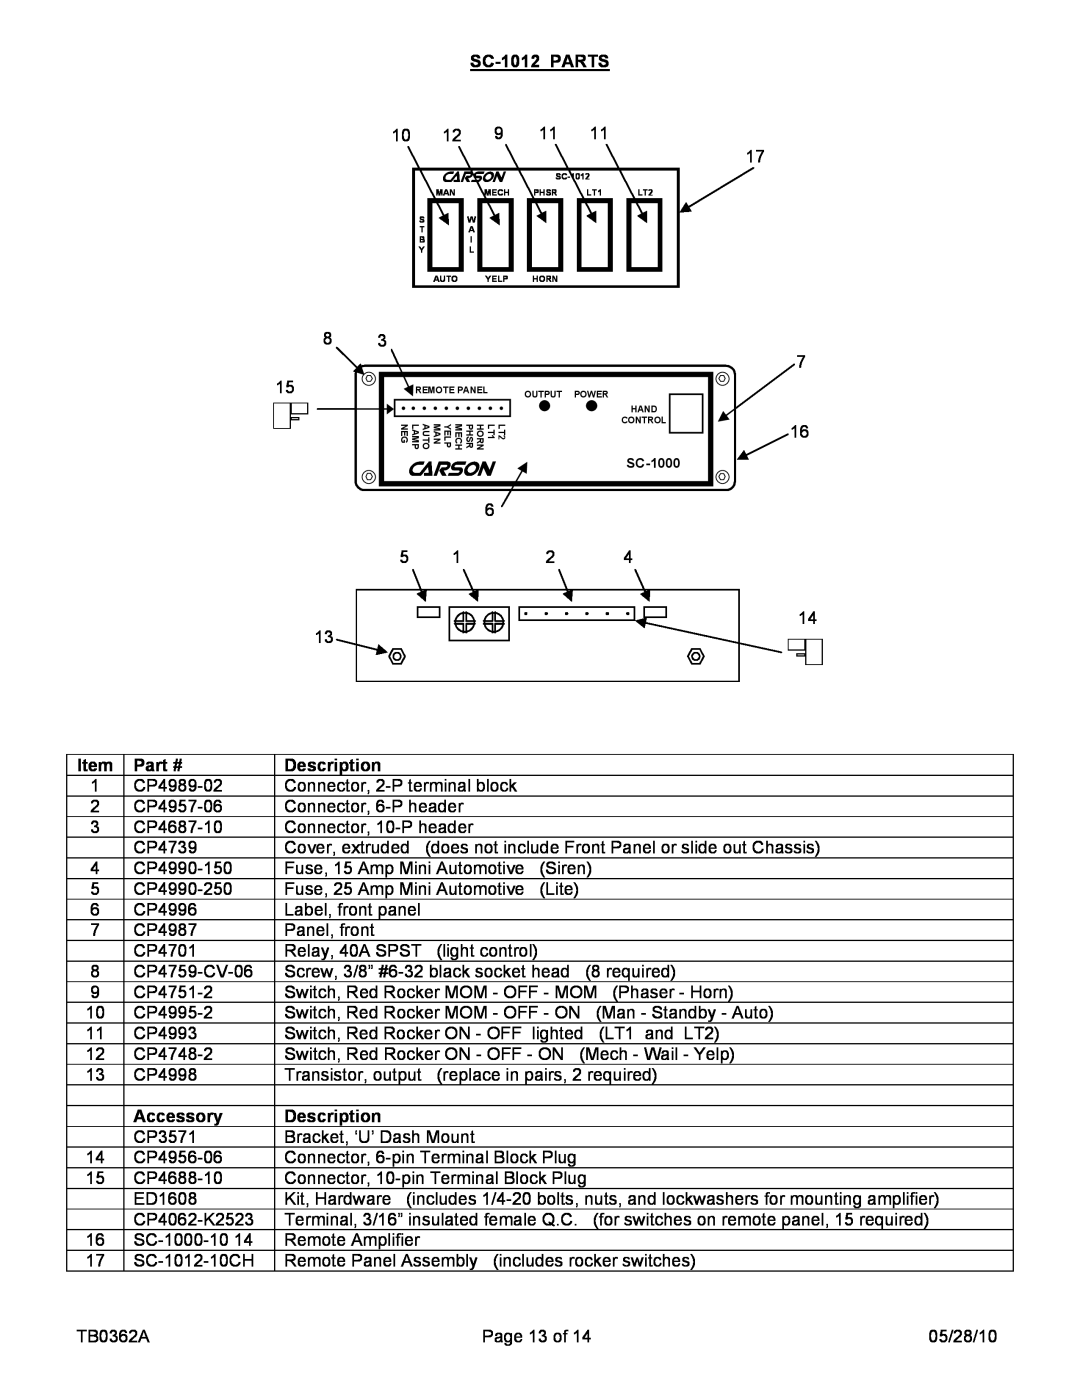 Carson SC-1002, 1022-10 14 V manual SC-1012 PARTS, Description, Accessory, SC-1000 